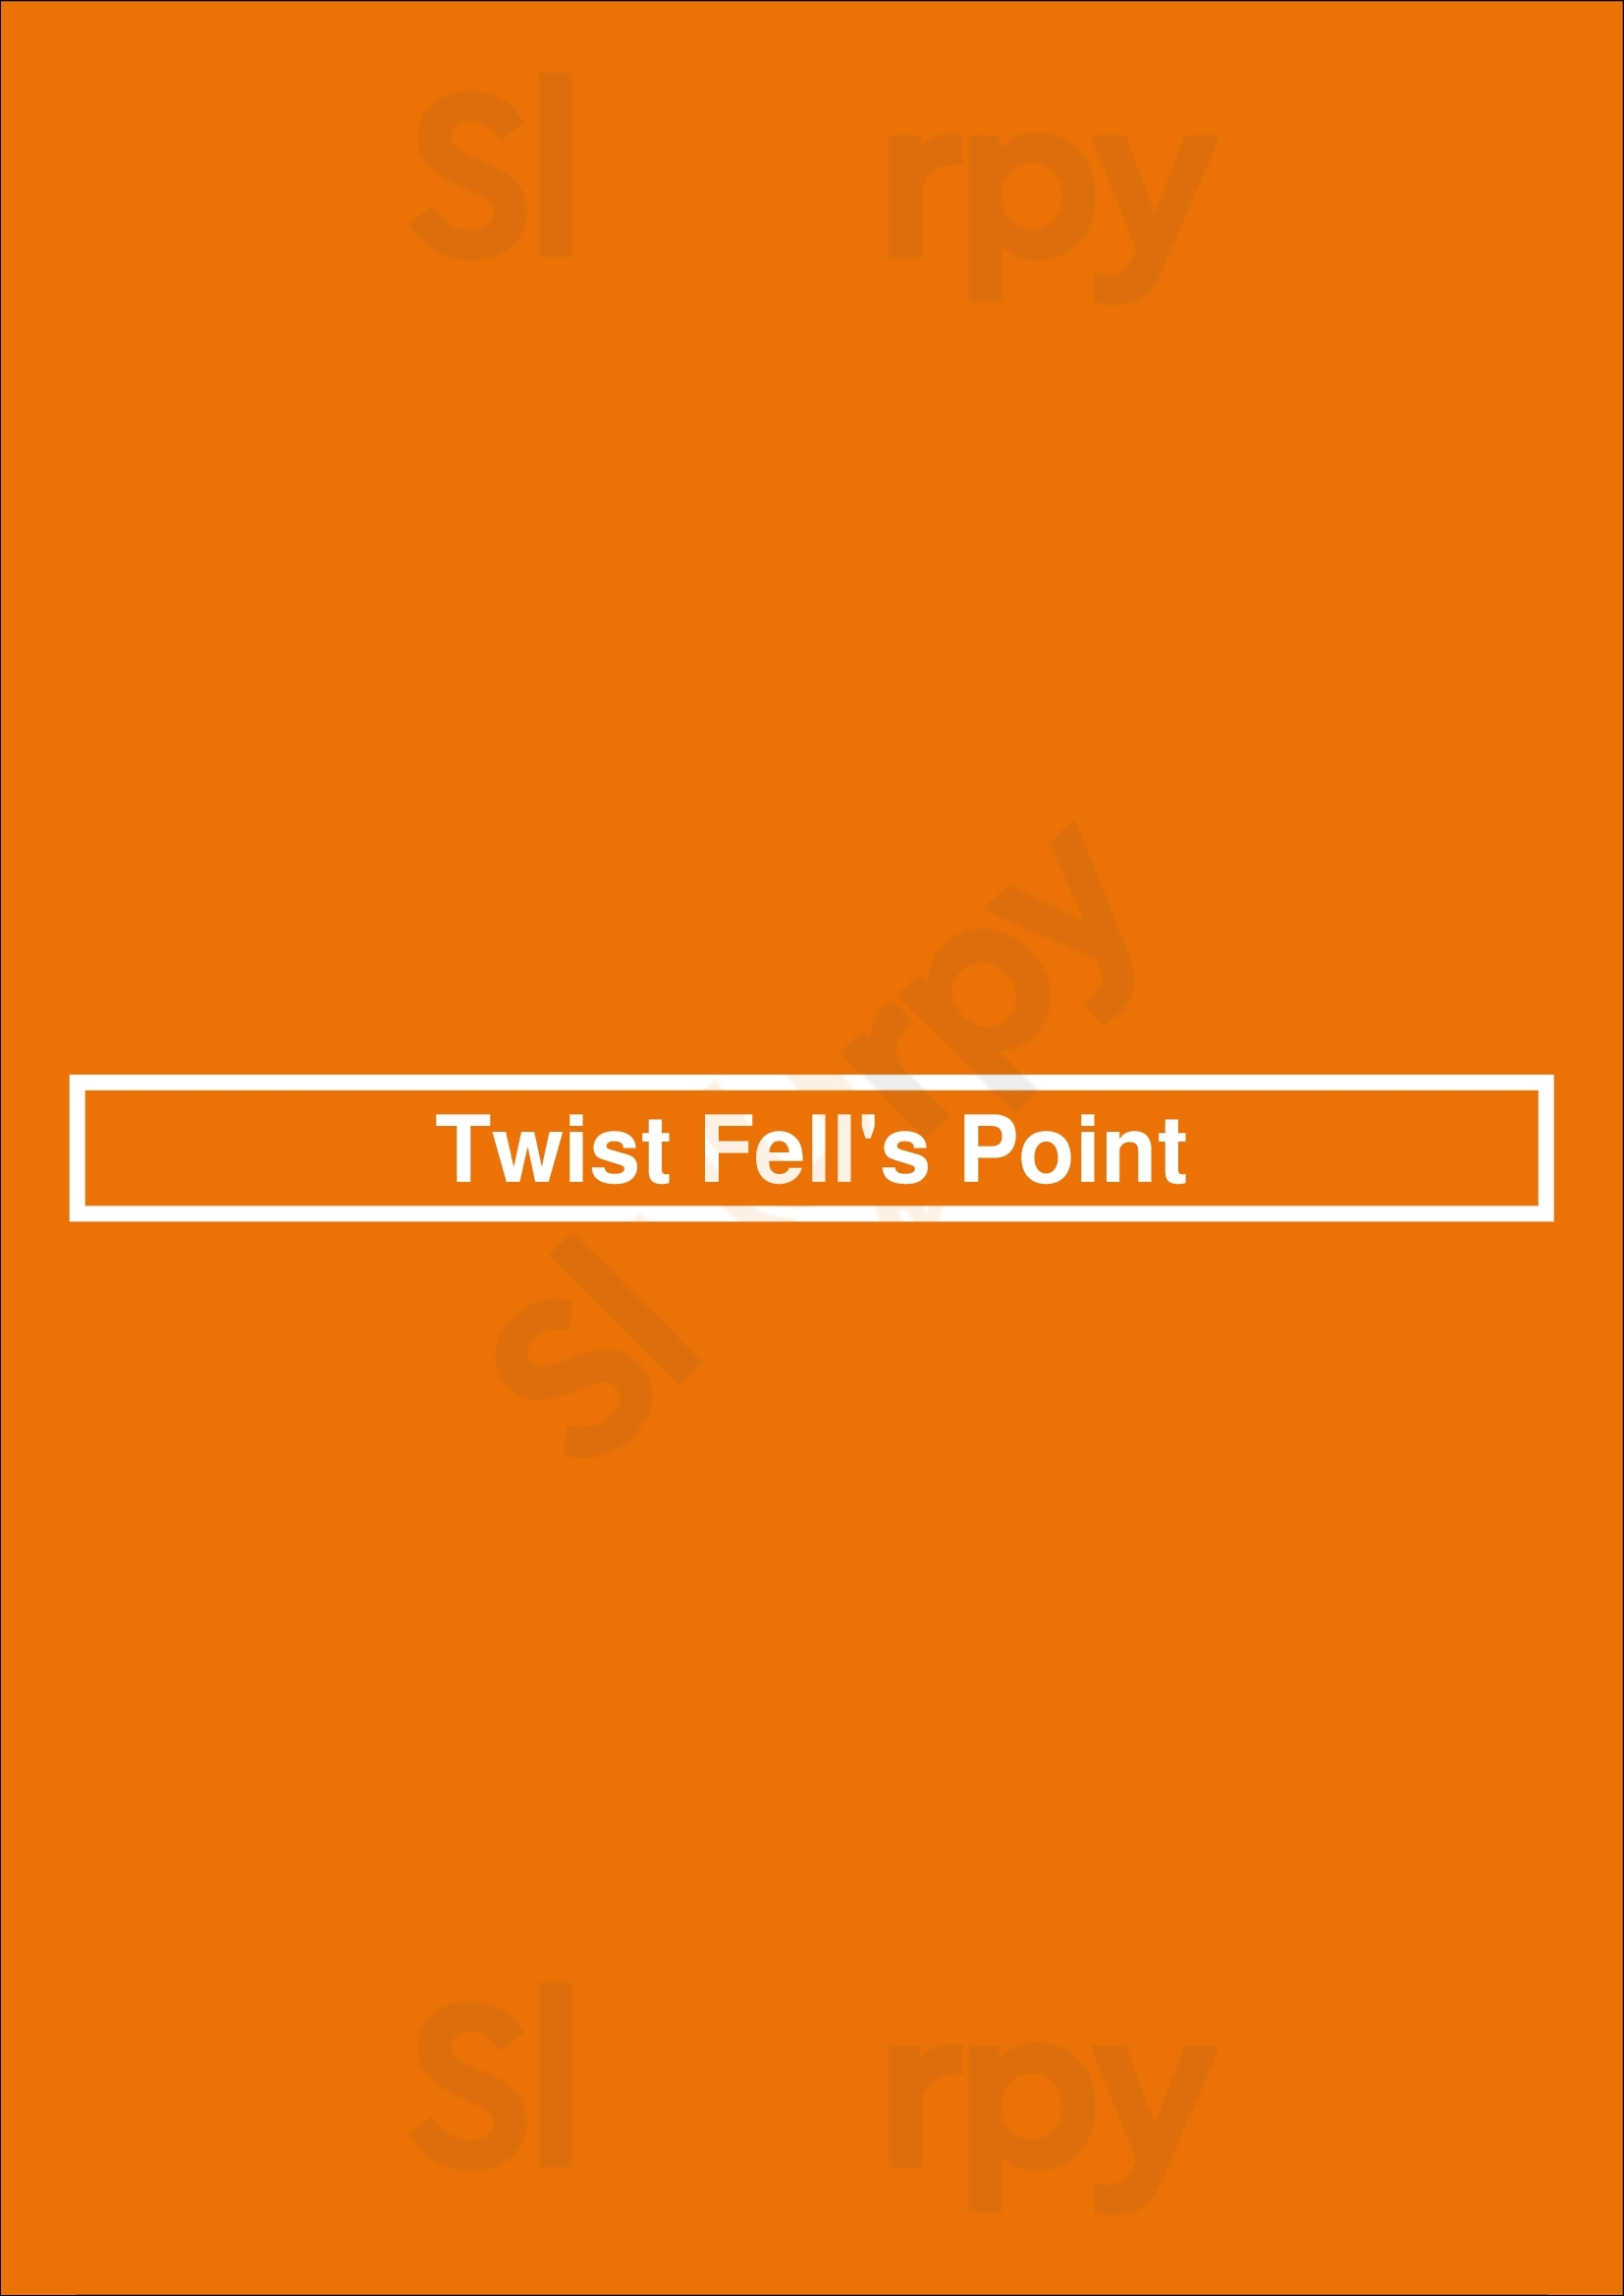 Twist Fell's Point Baltimore Menu - 1